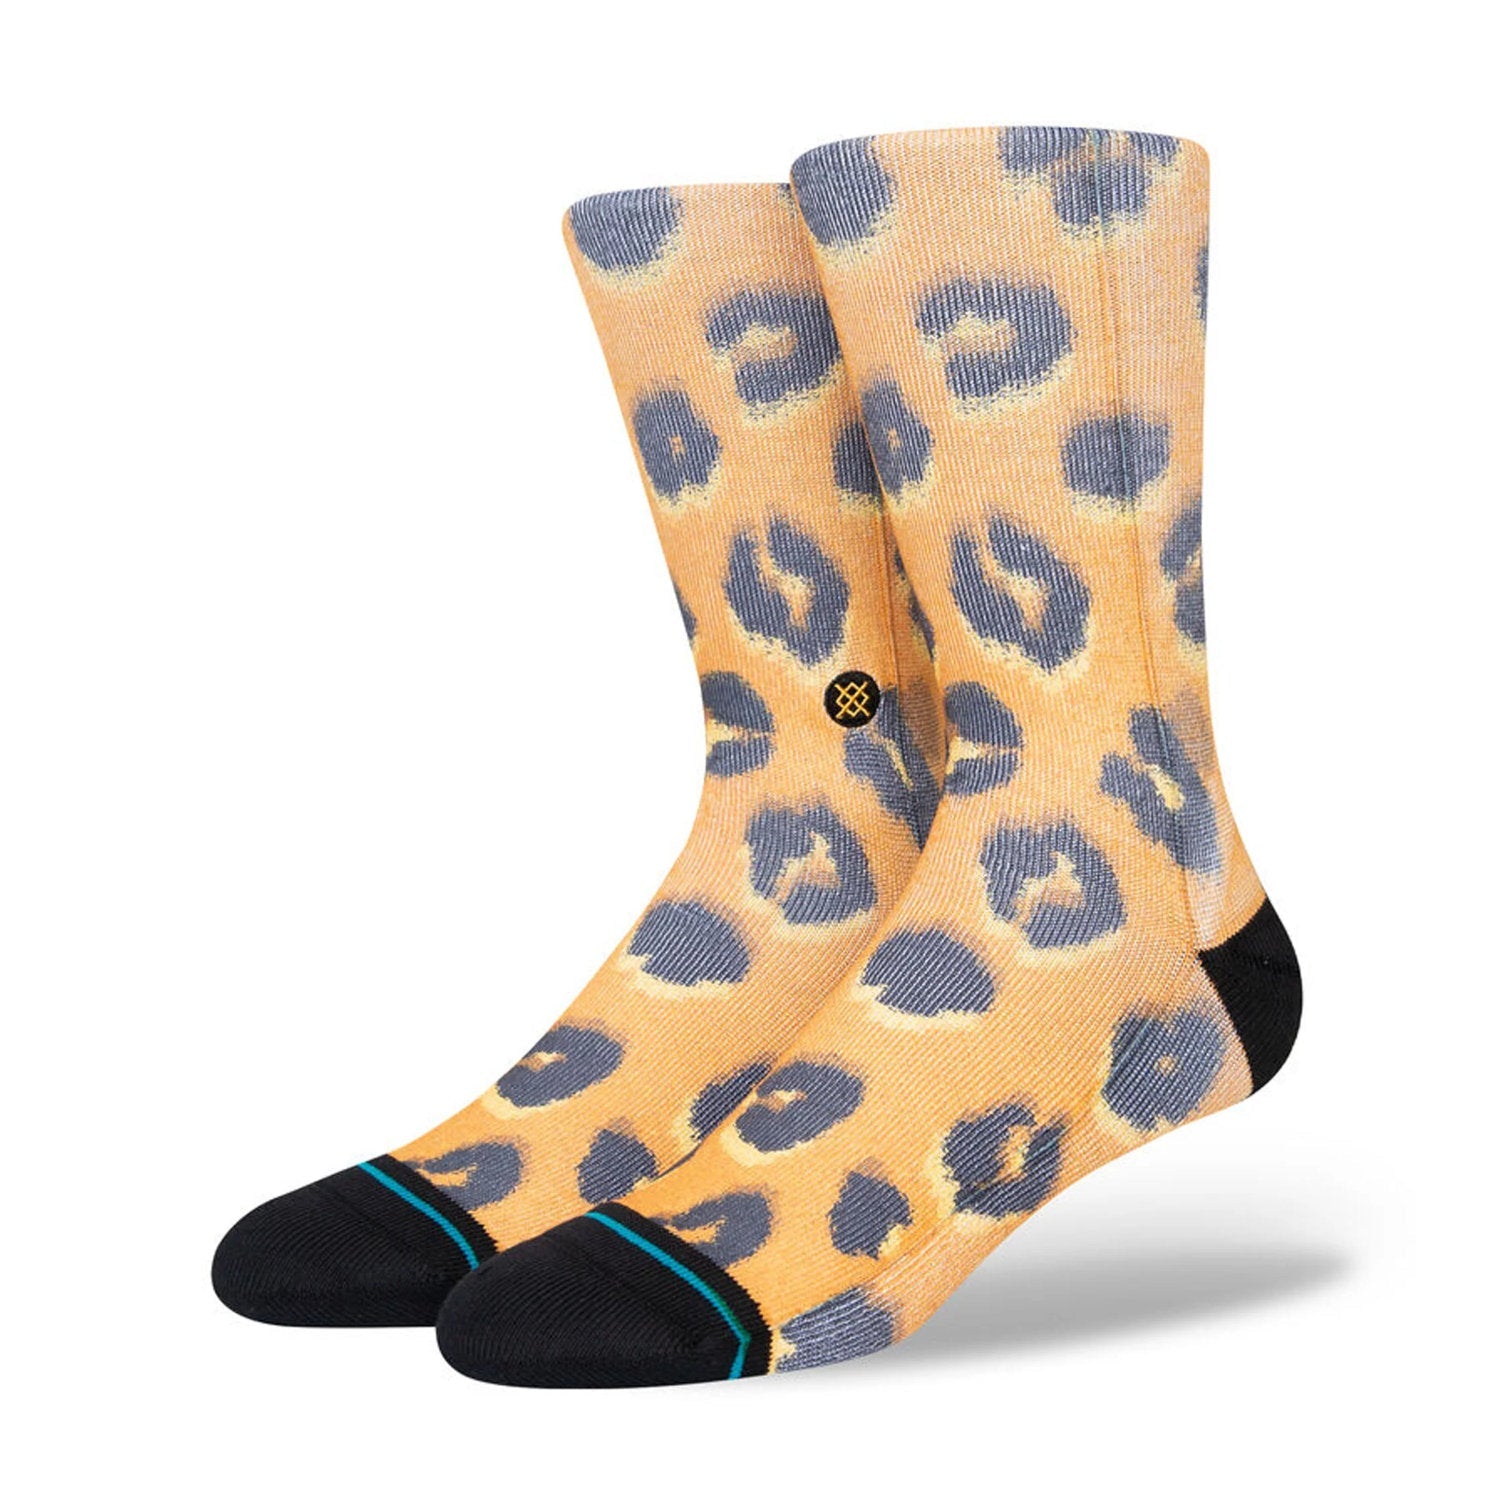 'Stance Taboo Leopard Print Crew Socks' in 'Multi' colour